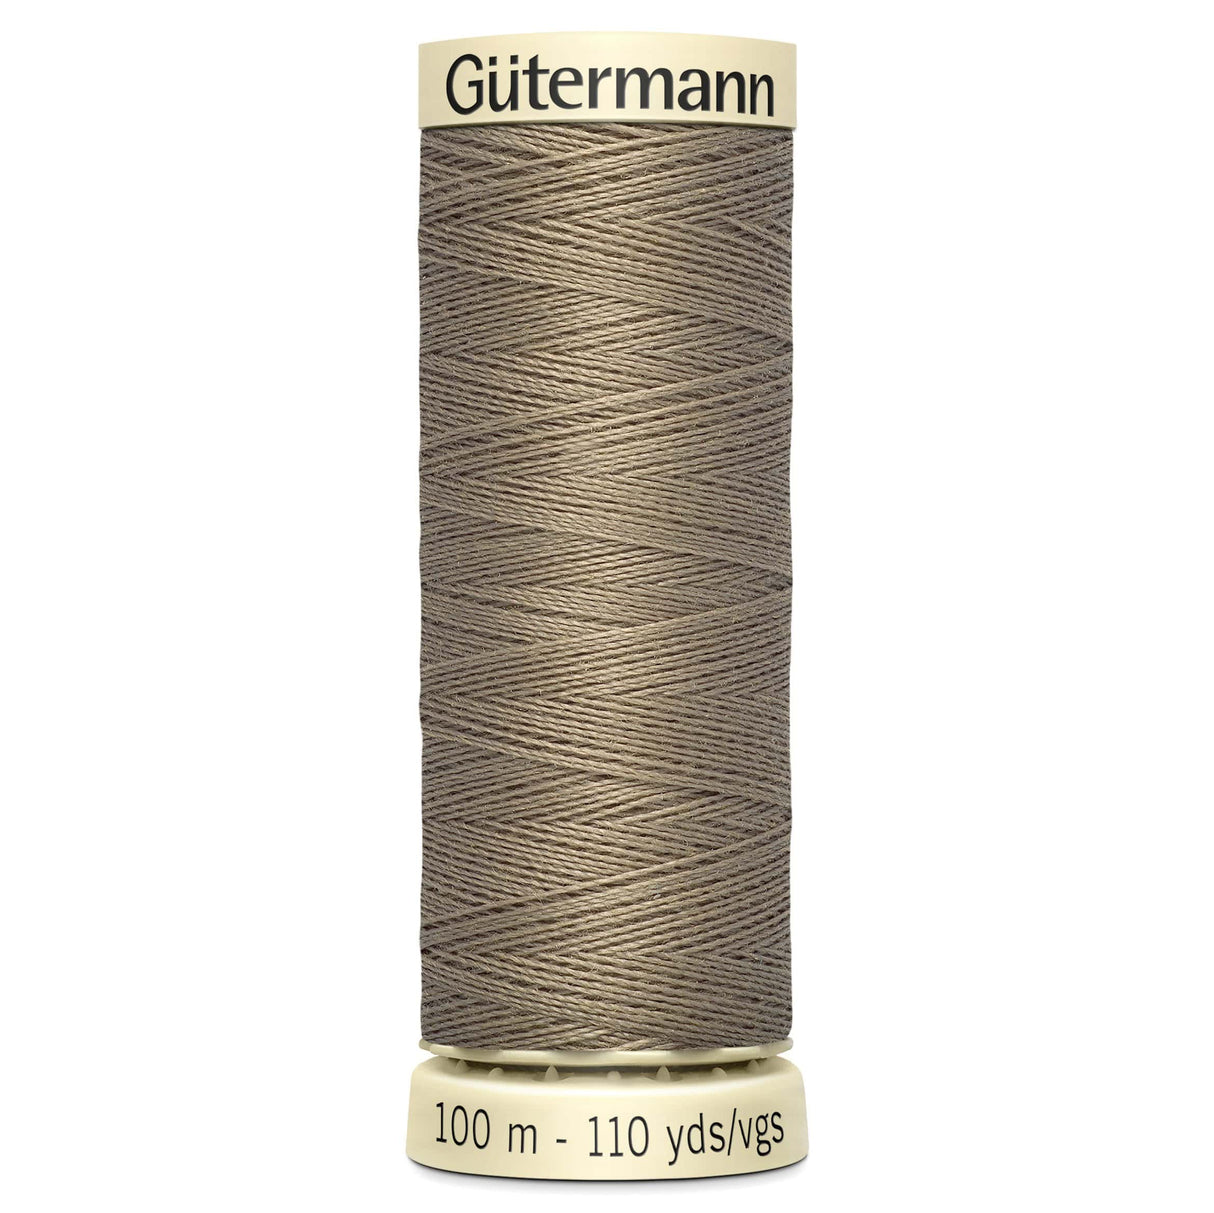 Groves Haberdashery 724 Gutermann Thread Sewing Cotton 100 m Black to Pink